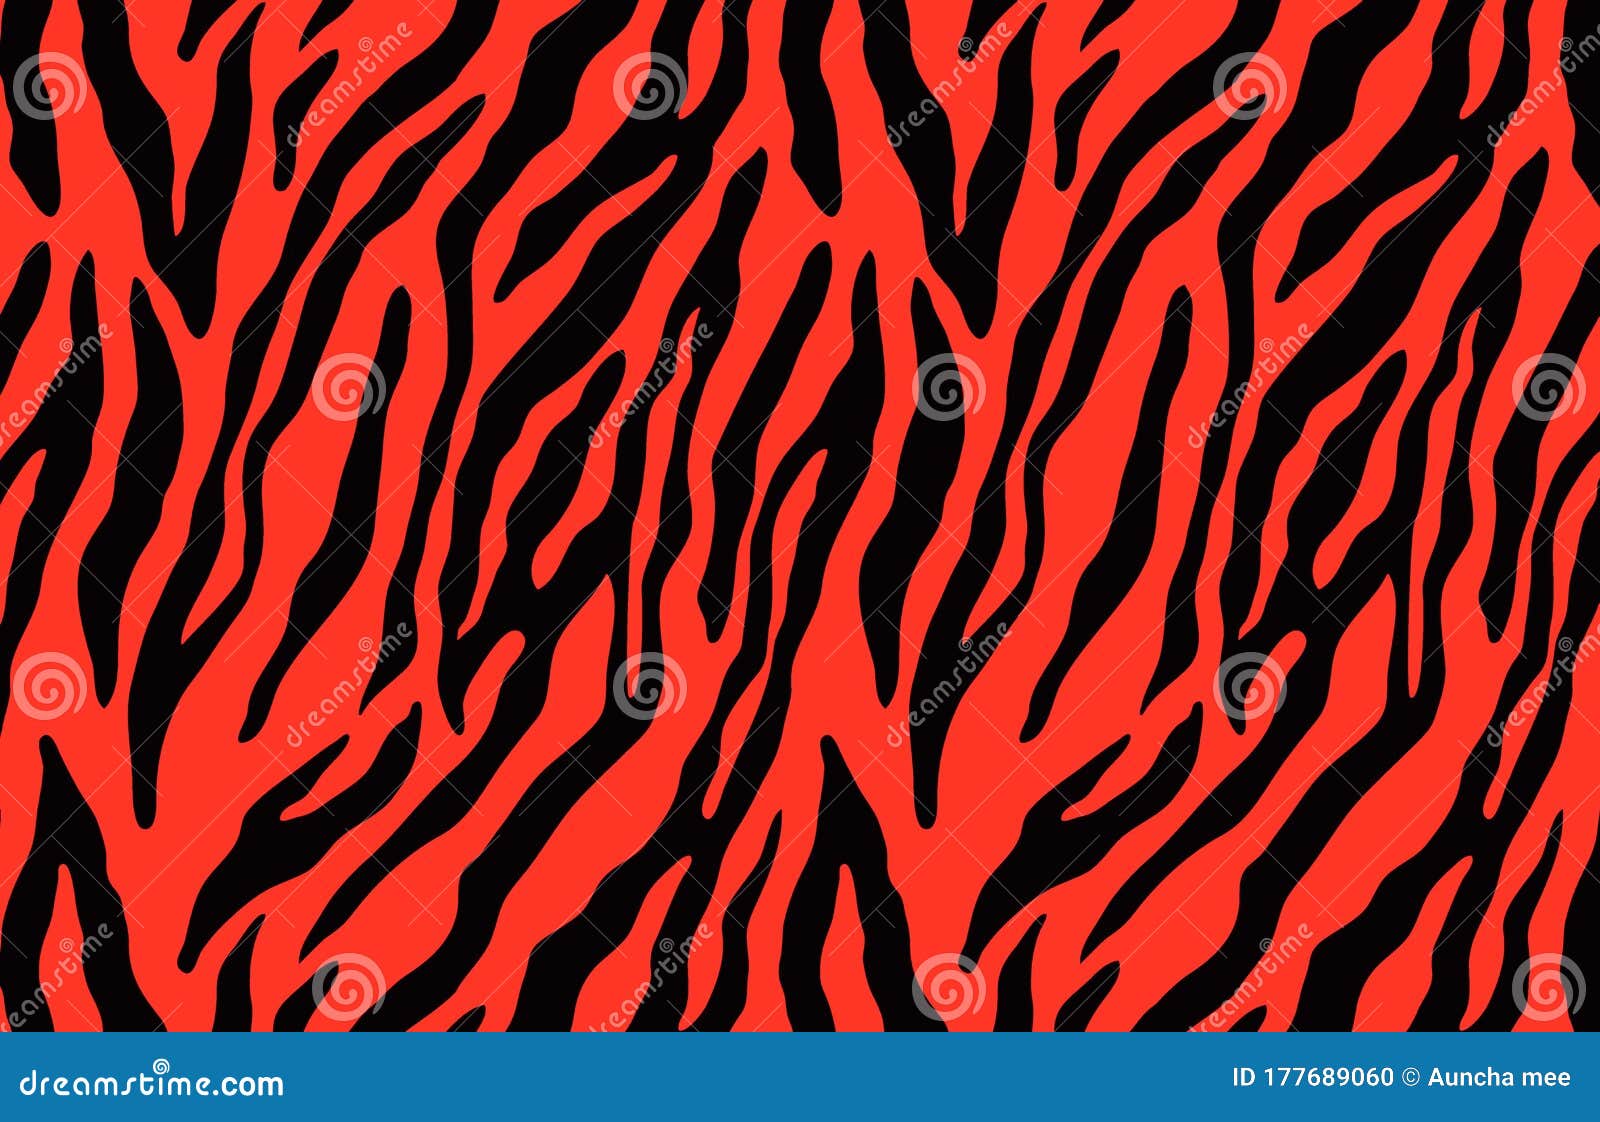 Pattern Texture Tiger Red Strip Repeated Seamless Black Jungle Safari ...